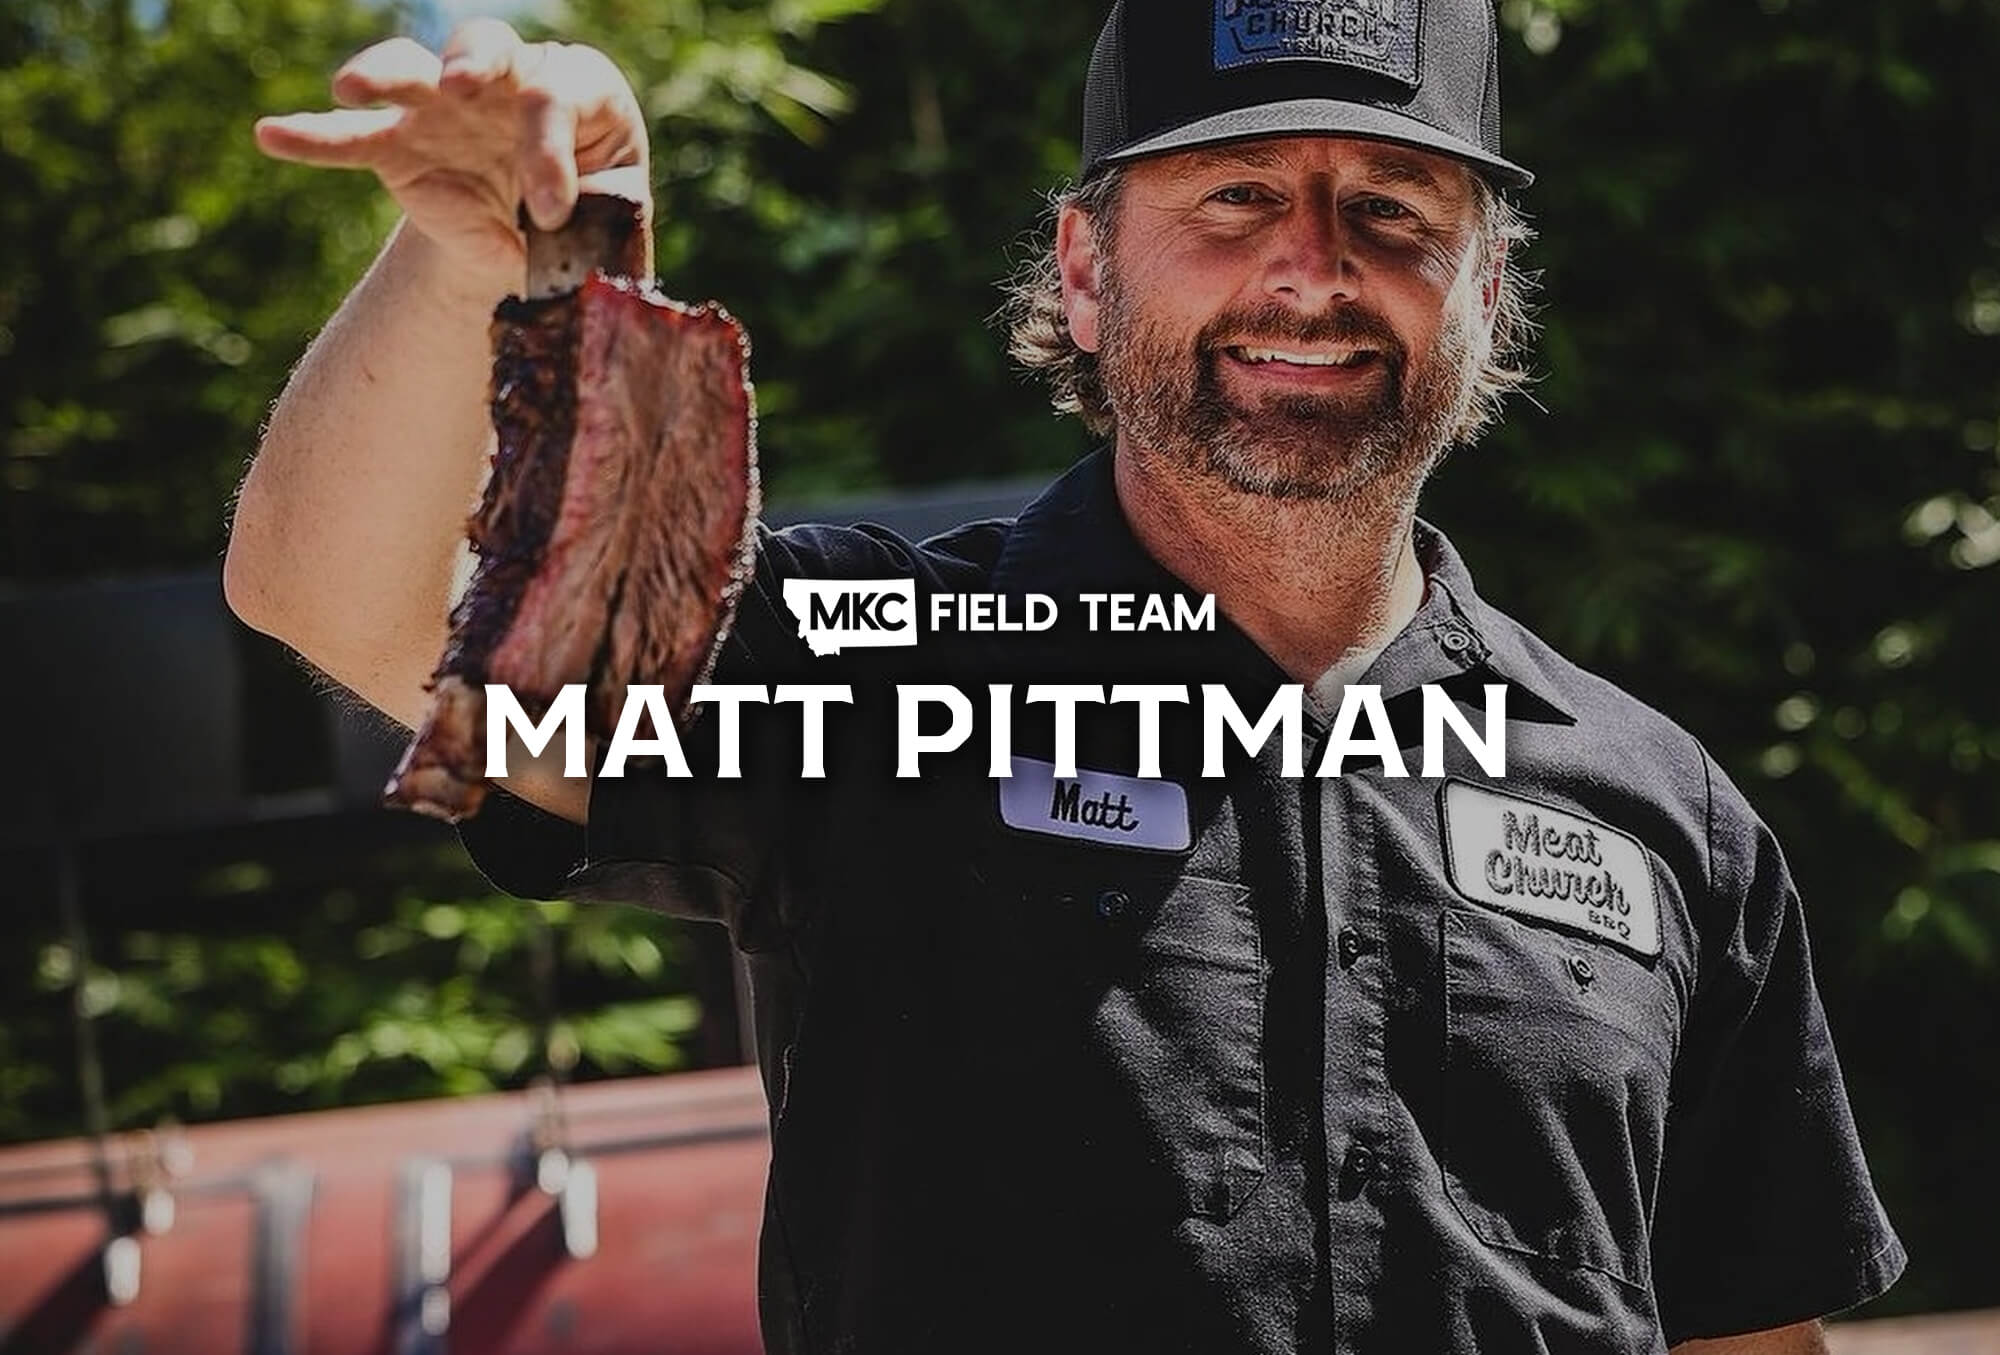 Matt Pittman